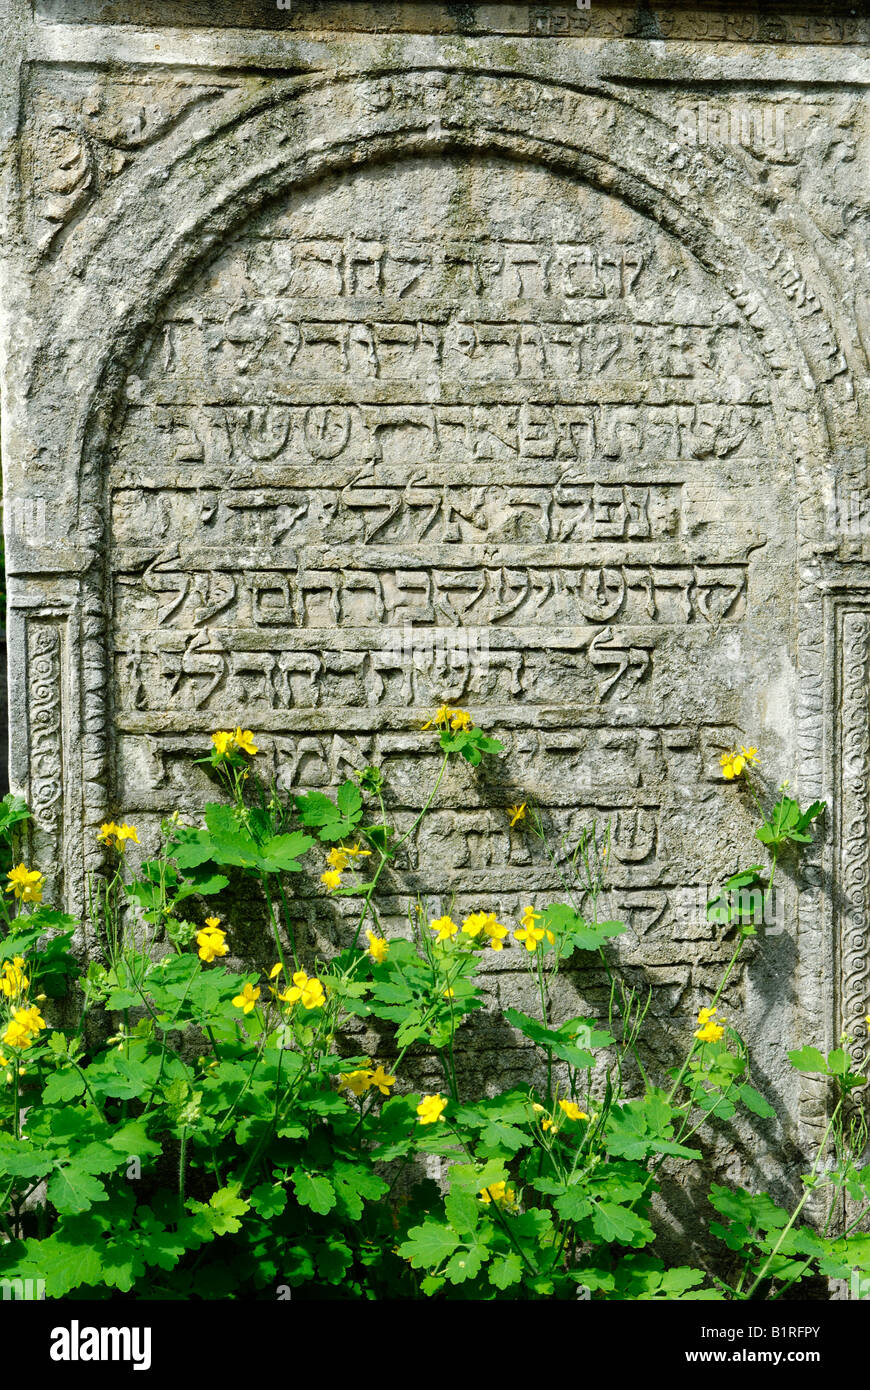 Gravestone with Hebrew inscription, Jewish cemetery Remuh, Kazimierz, UNESCO World Heritage Site, Kraków, Poland, Europe Stock Photo